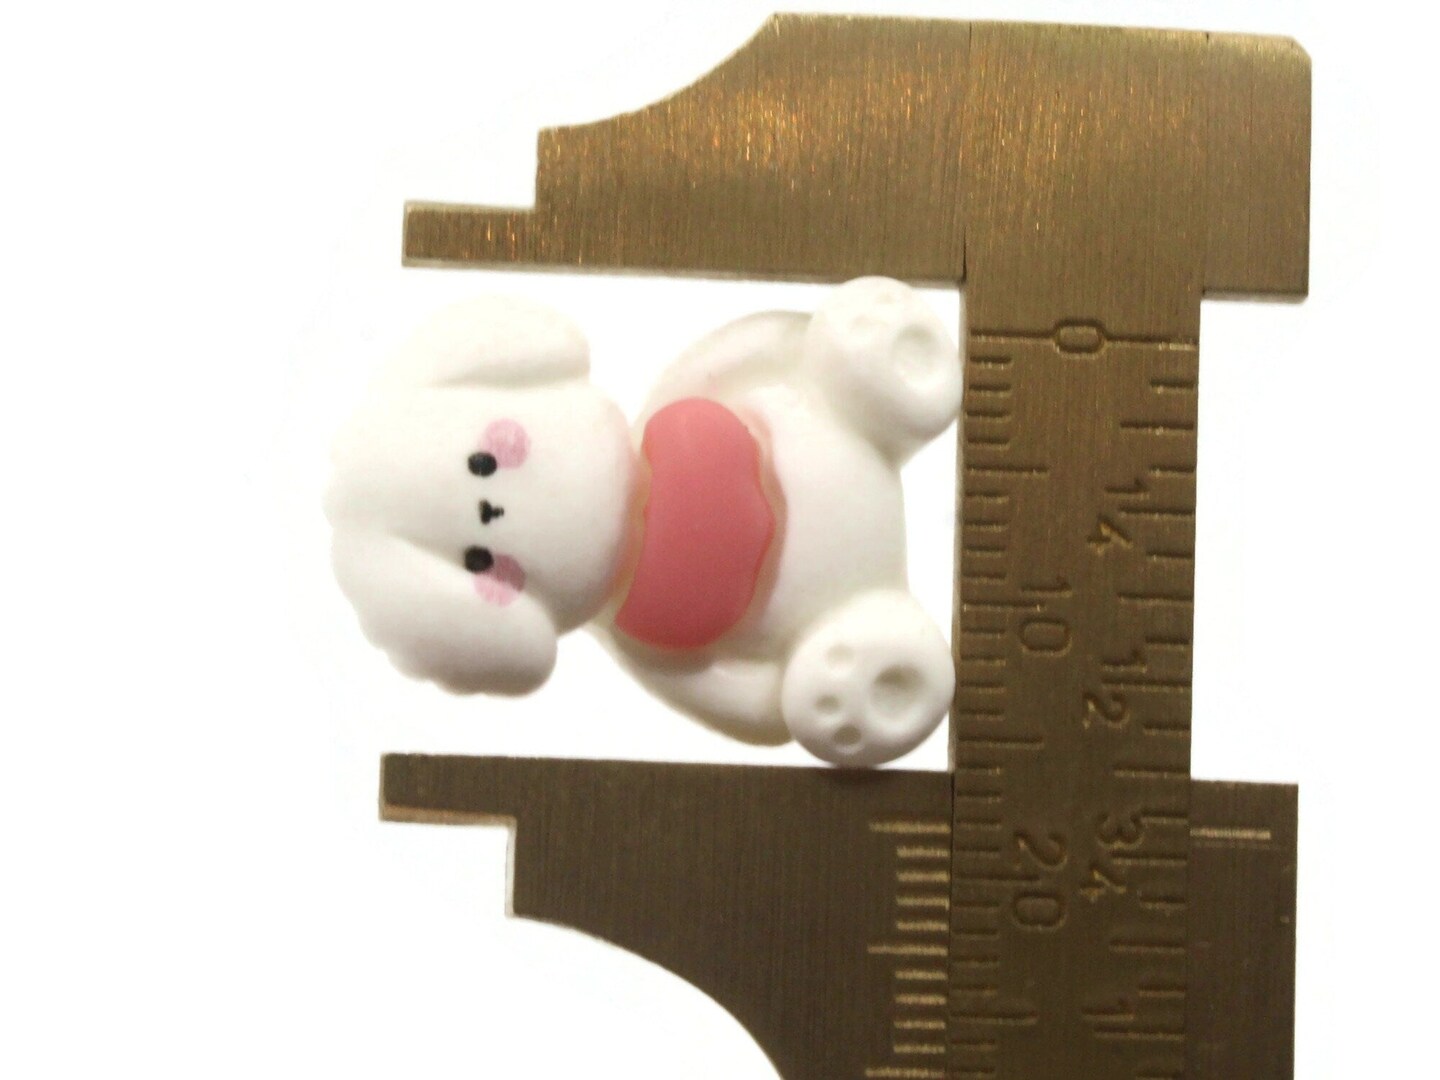 8 23mm White Dog Flatback Plastic Cabochons